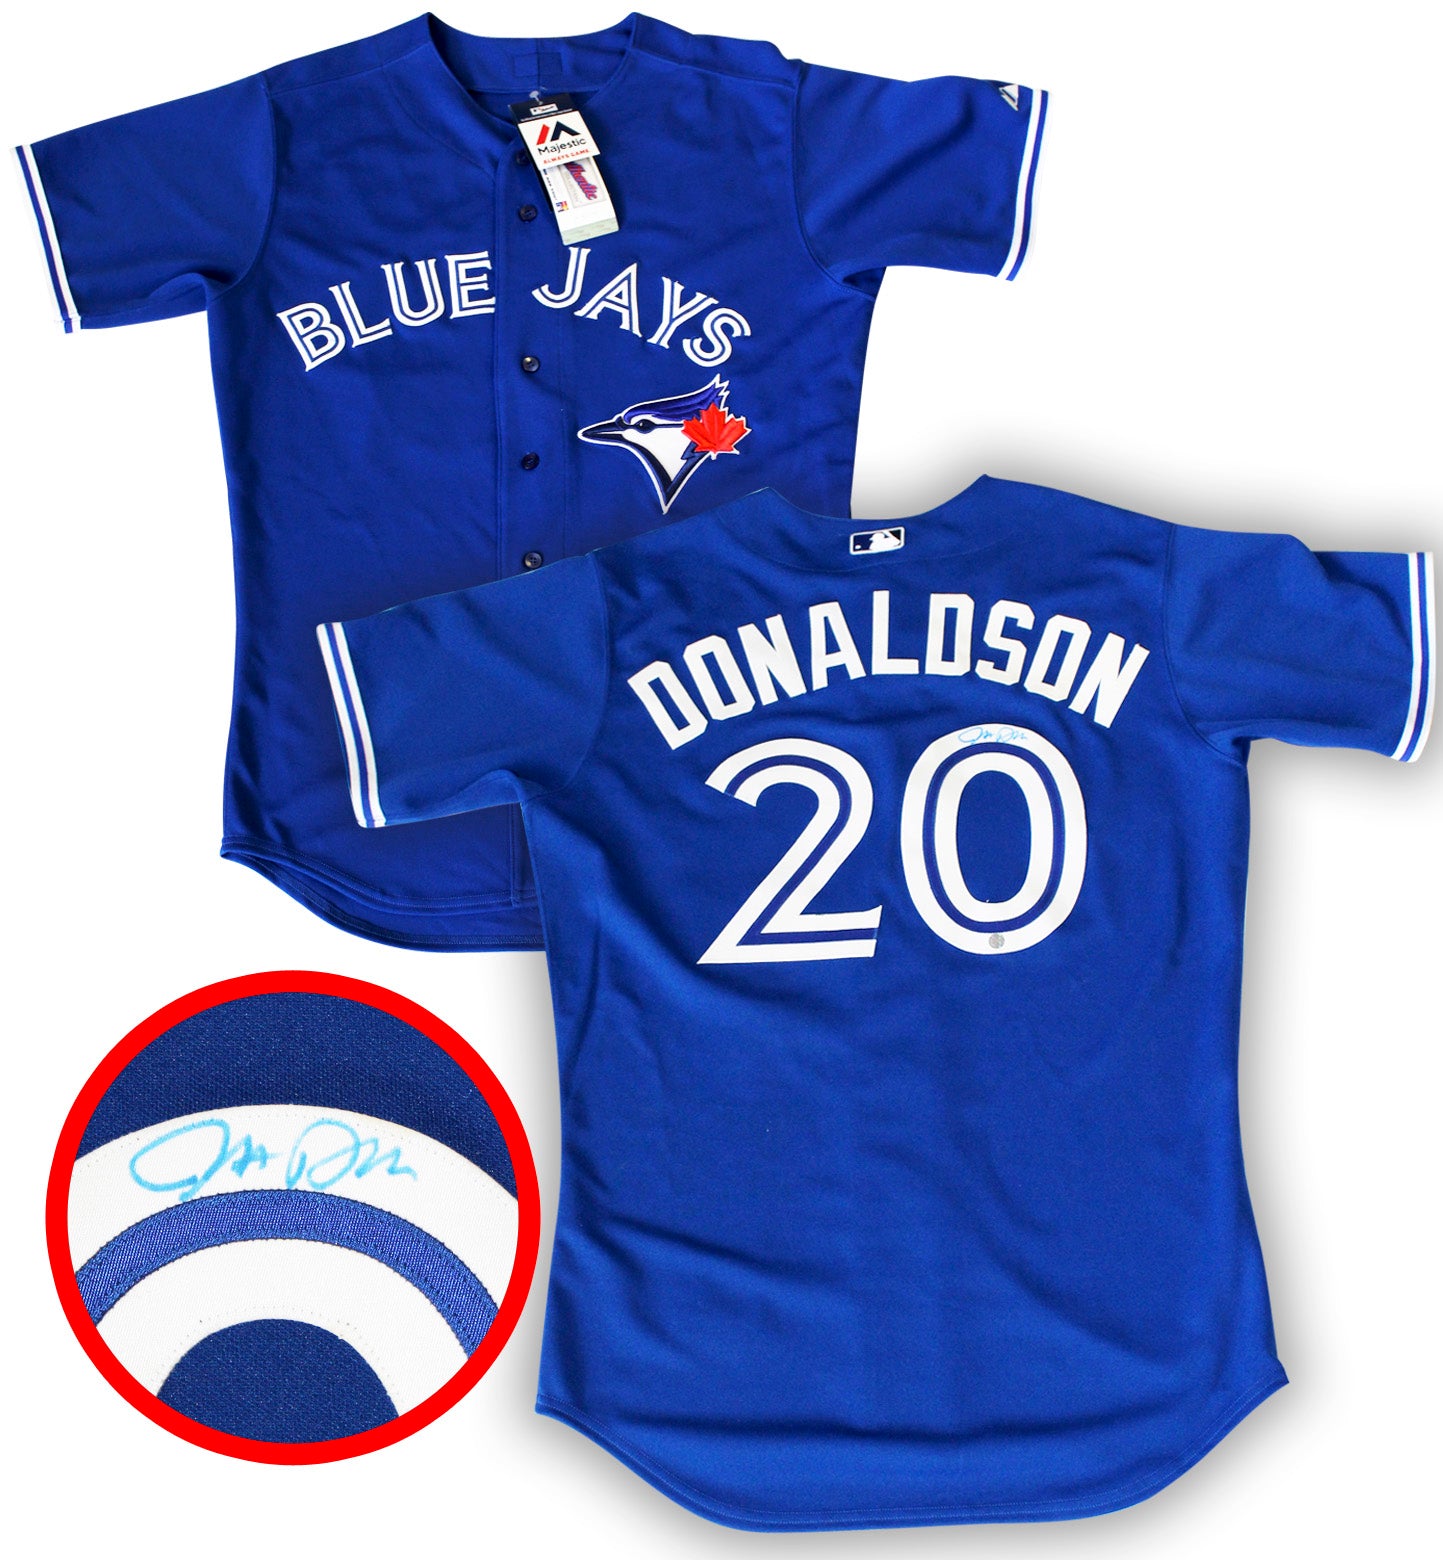 Donaldson #20 Toronto Blue Jays Authentic Sewn Jersey Size Men 52 - NWT